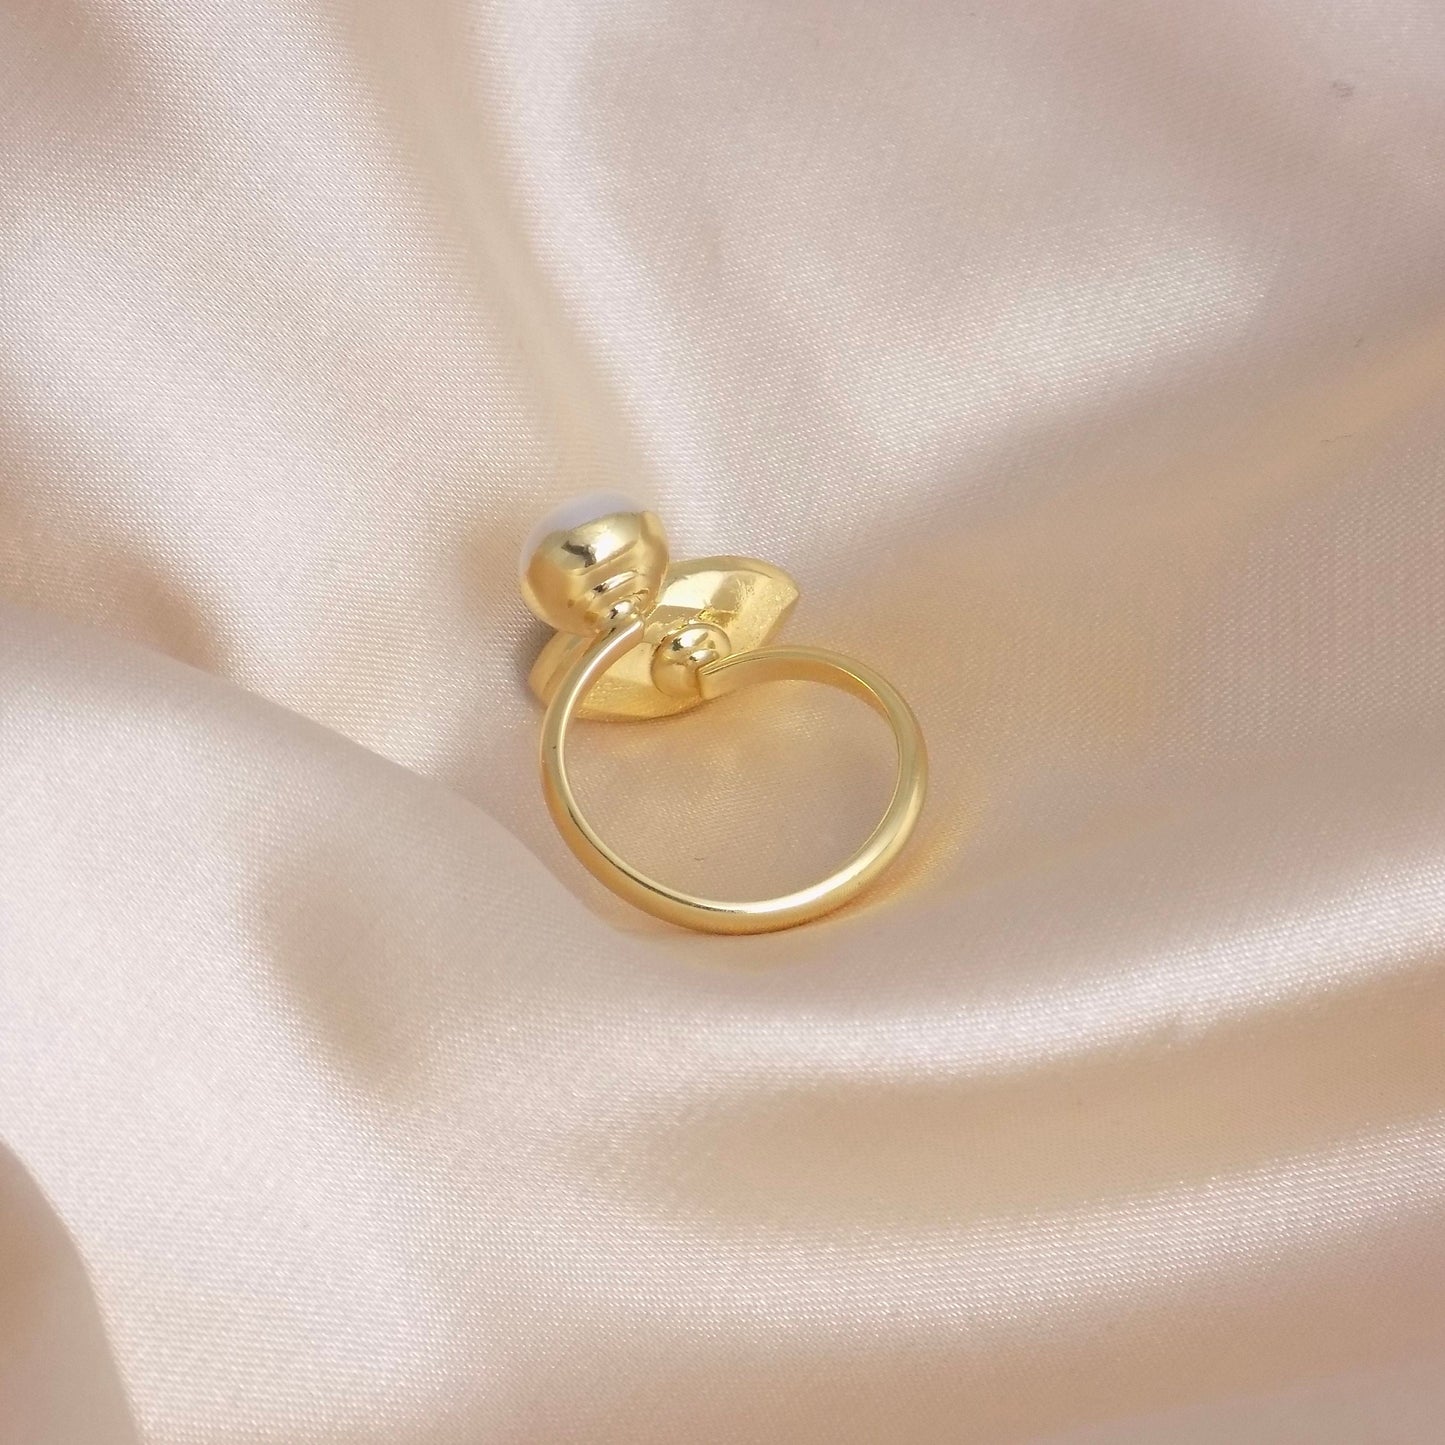 Amazonite Ring, Freshwater Pearl Ring, Gold Adjustable Multistone Statement Rings, Gift Women, M6-739